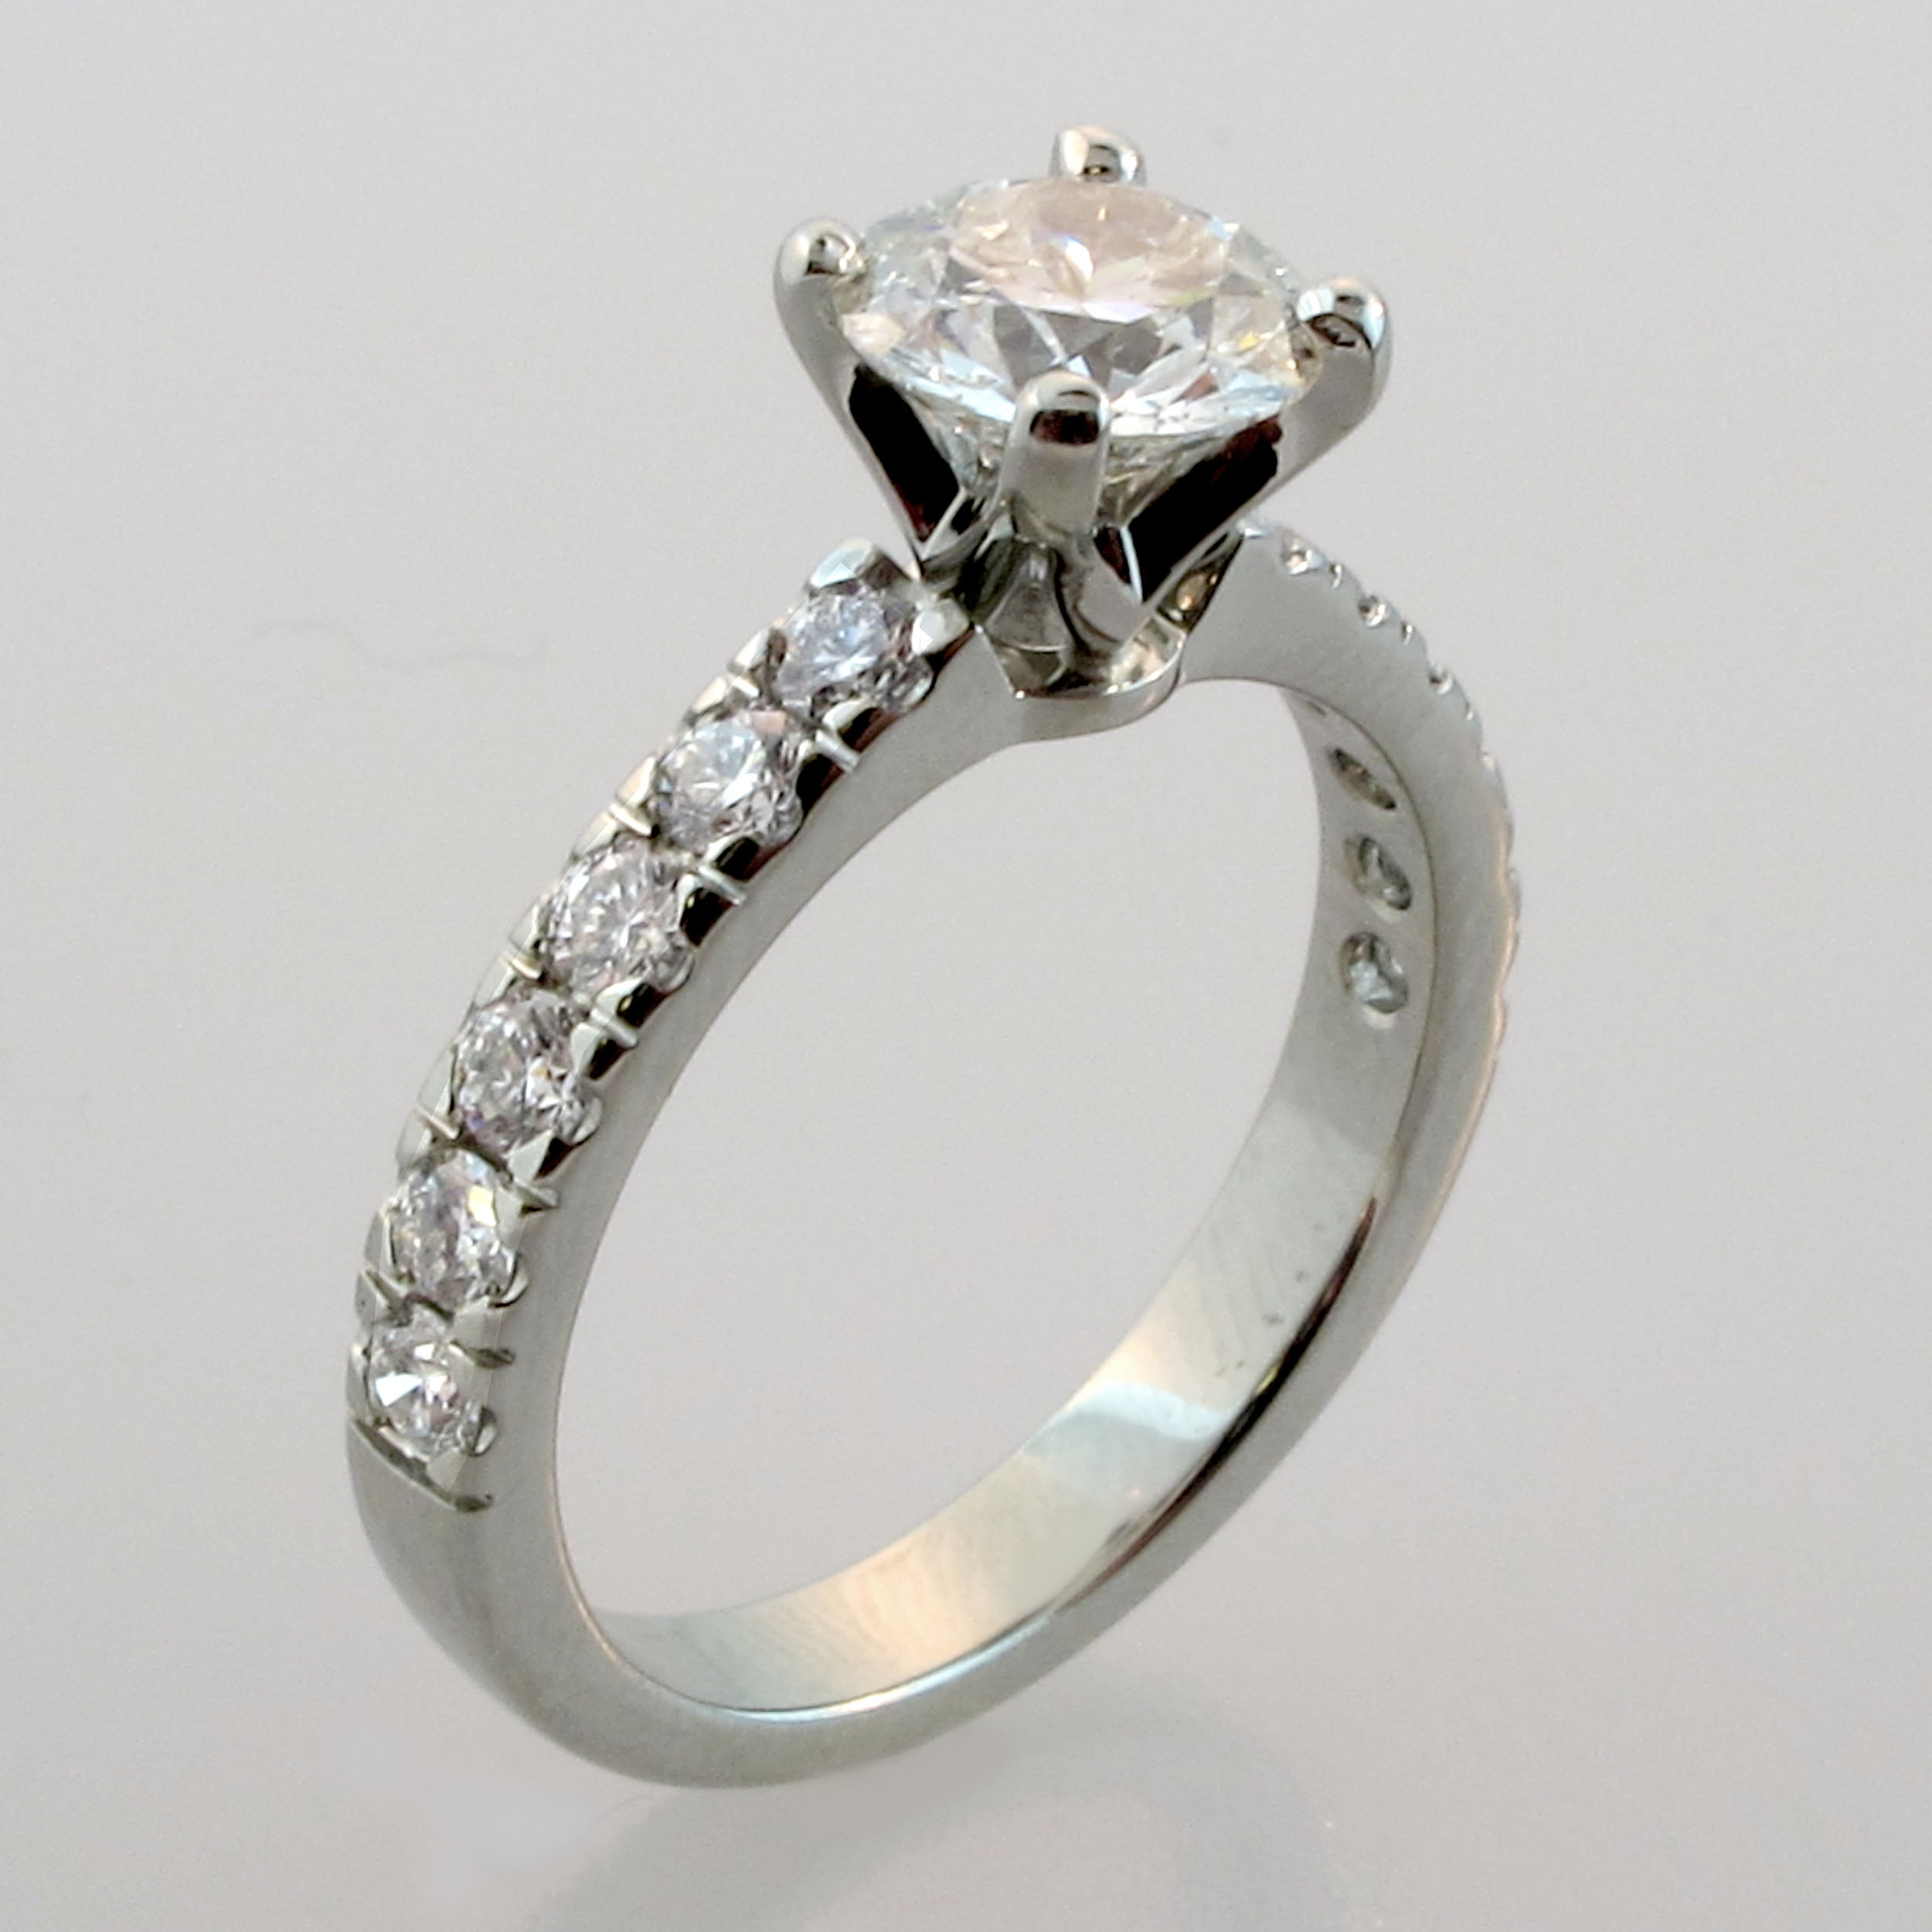 Round Brilliant Cut Diamond Engagement Ring 4-prong